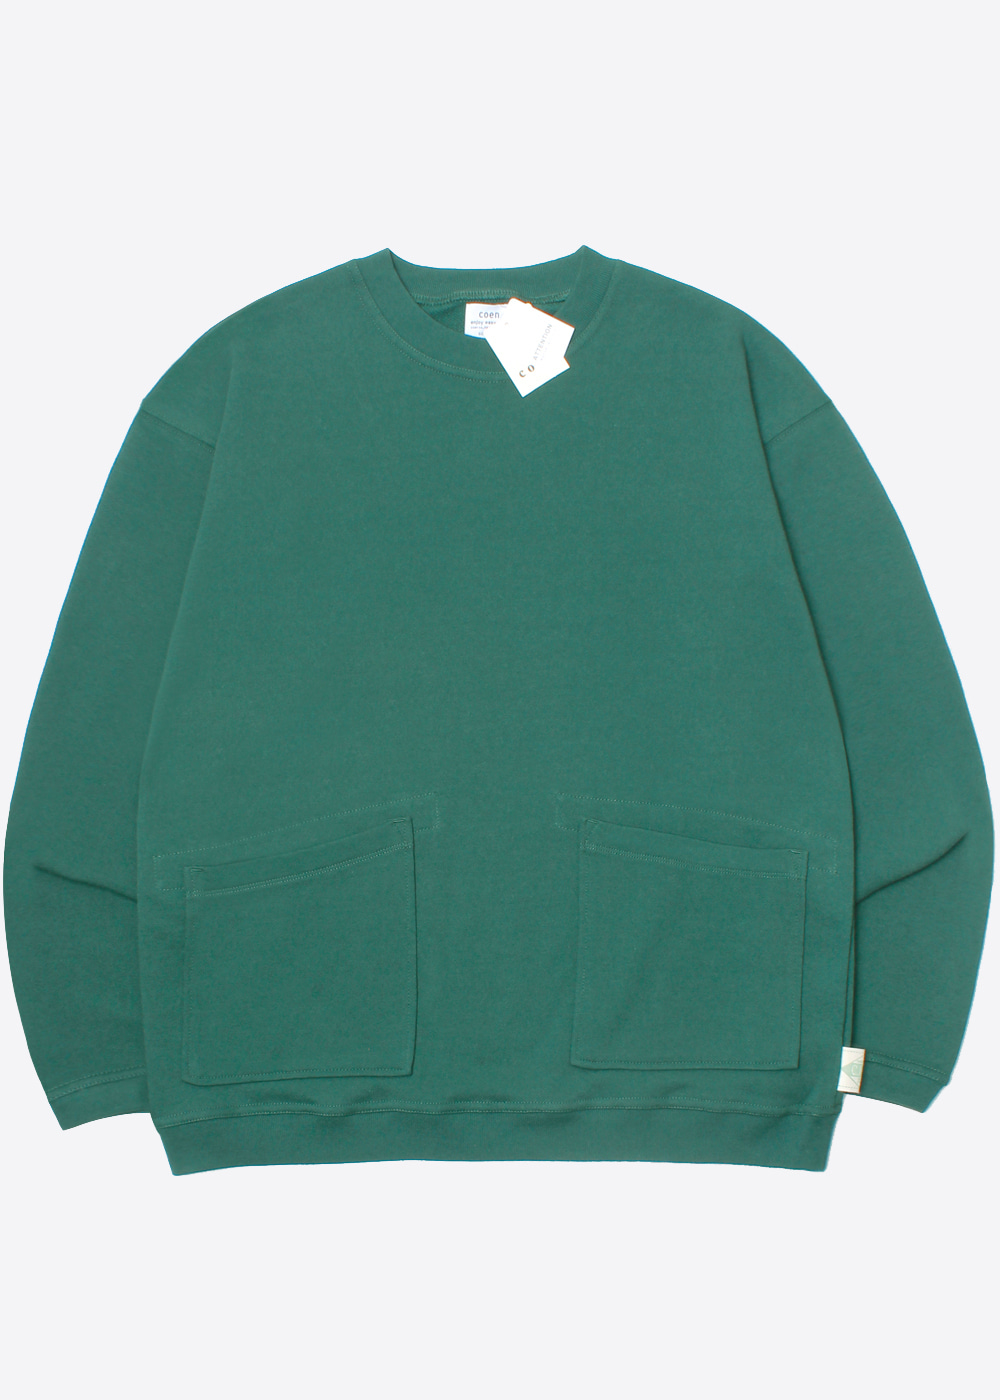 COEN BY UNITED ARROWS’over fit’big pocket sweatshirt